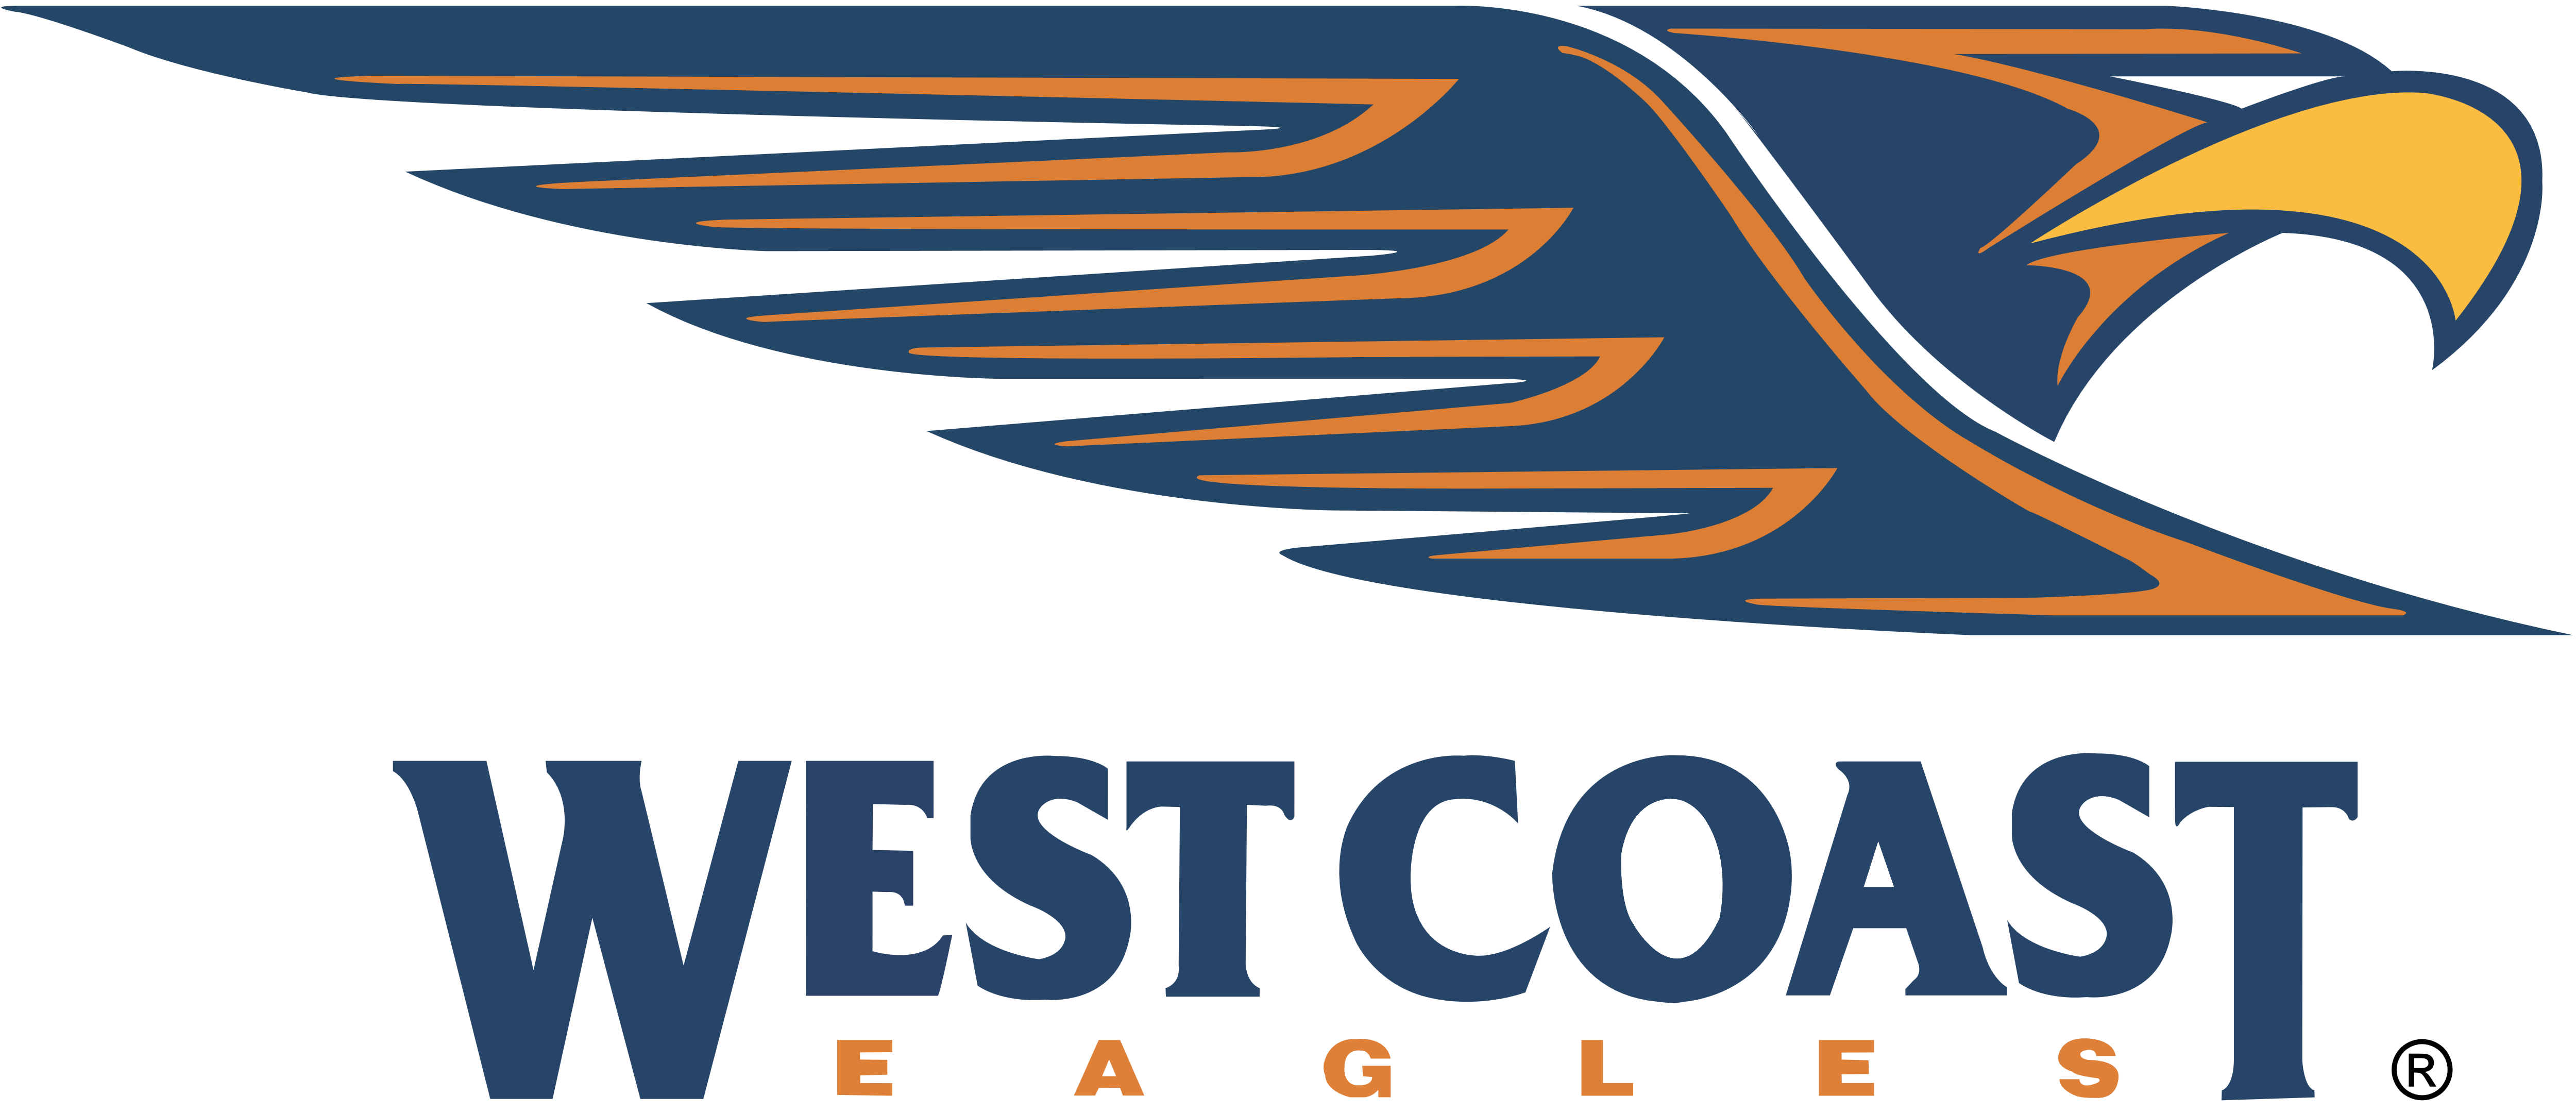 Vektor Eagles Logo Transparan